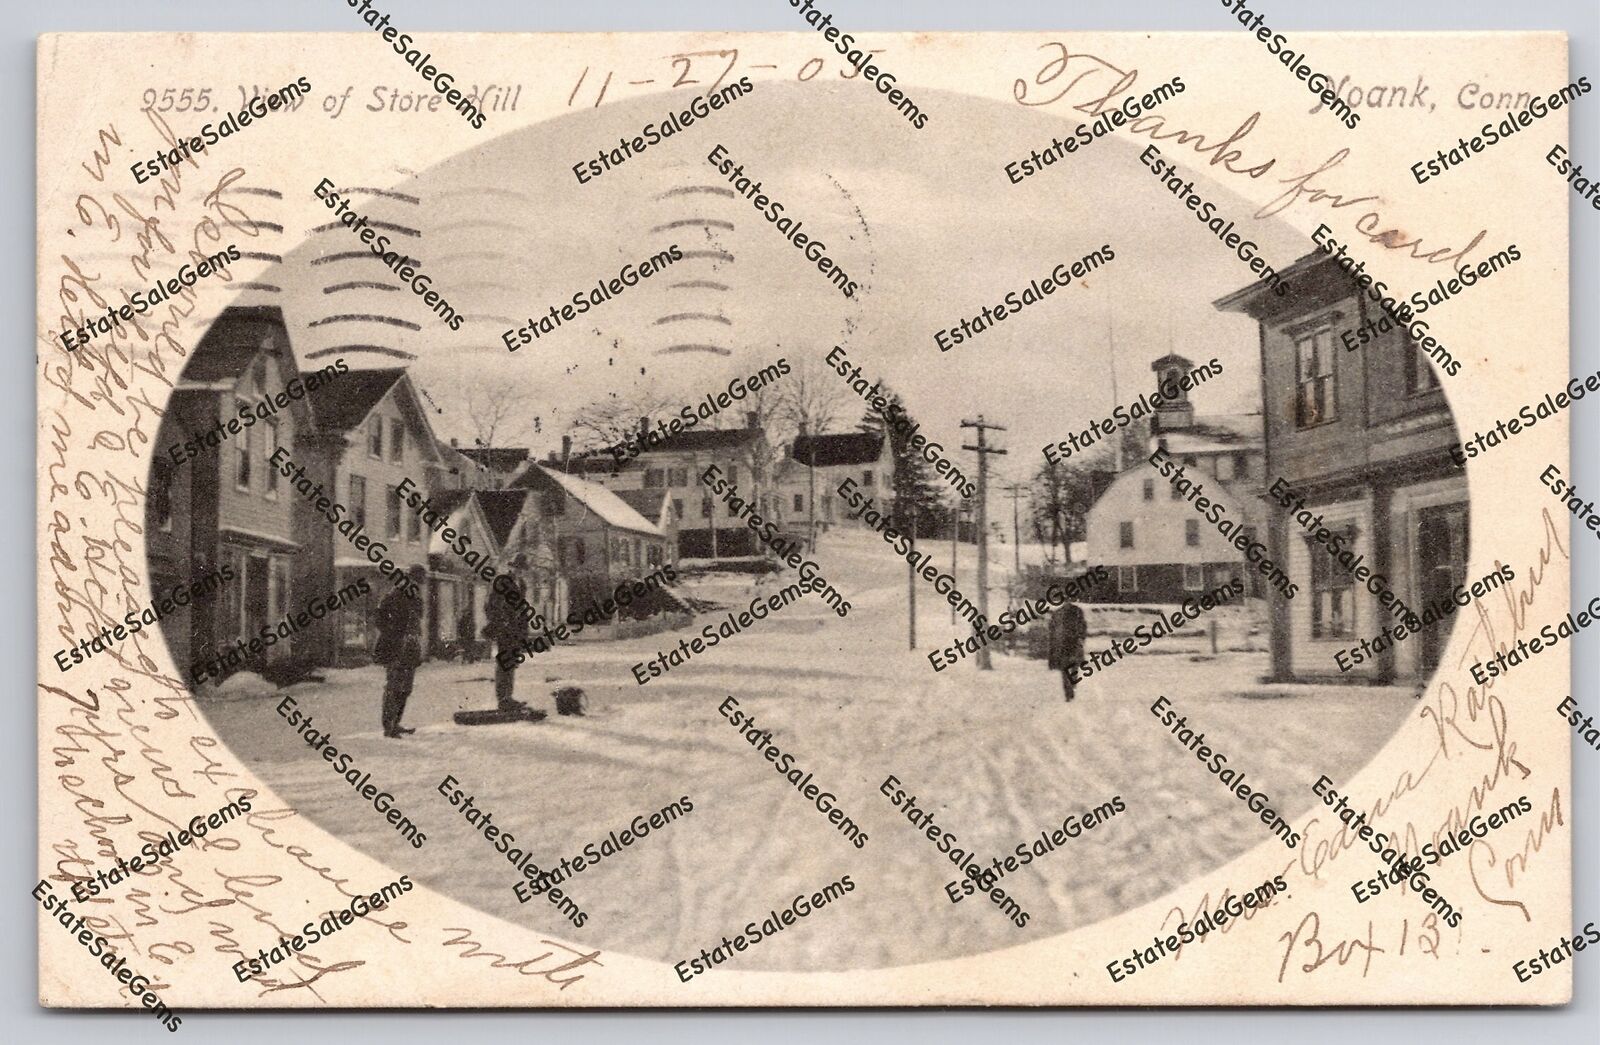 Antique Postcard 1905 View Of Store Hill Noank Connecticut